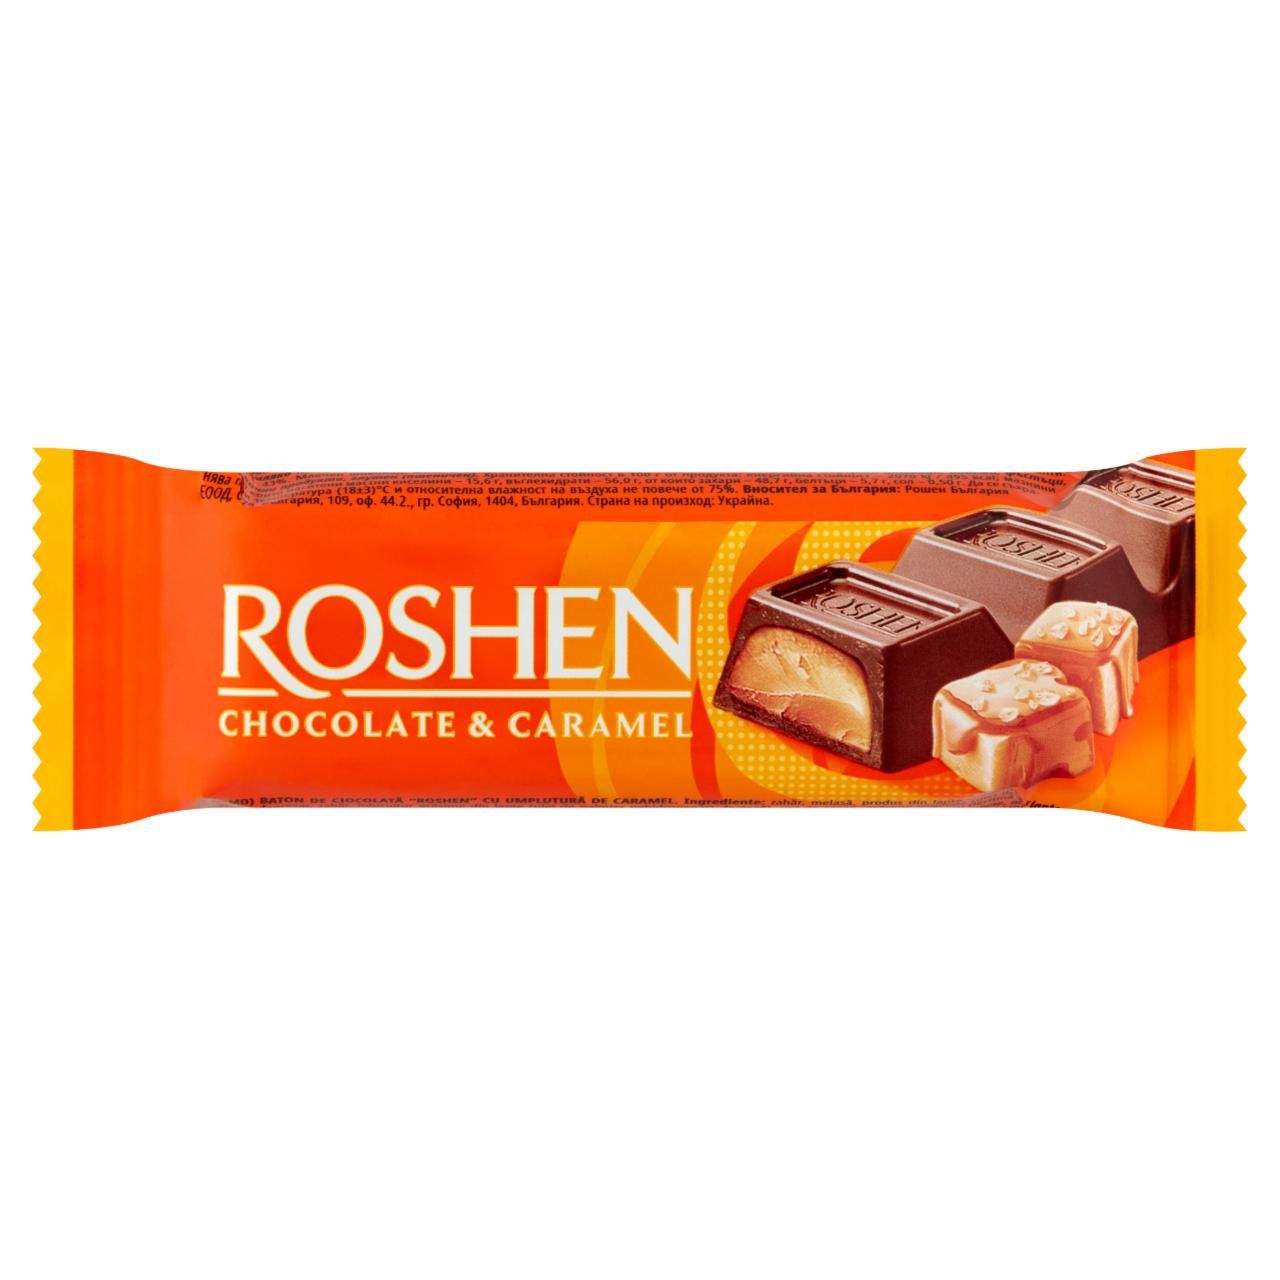 Fotografie - Chocolate & Caramel Roshen